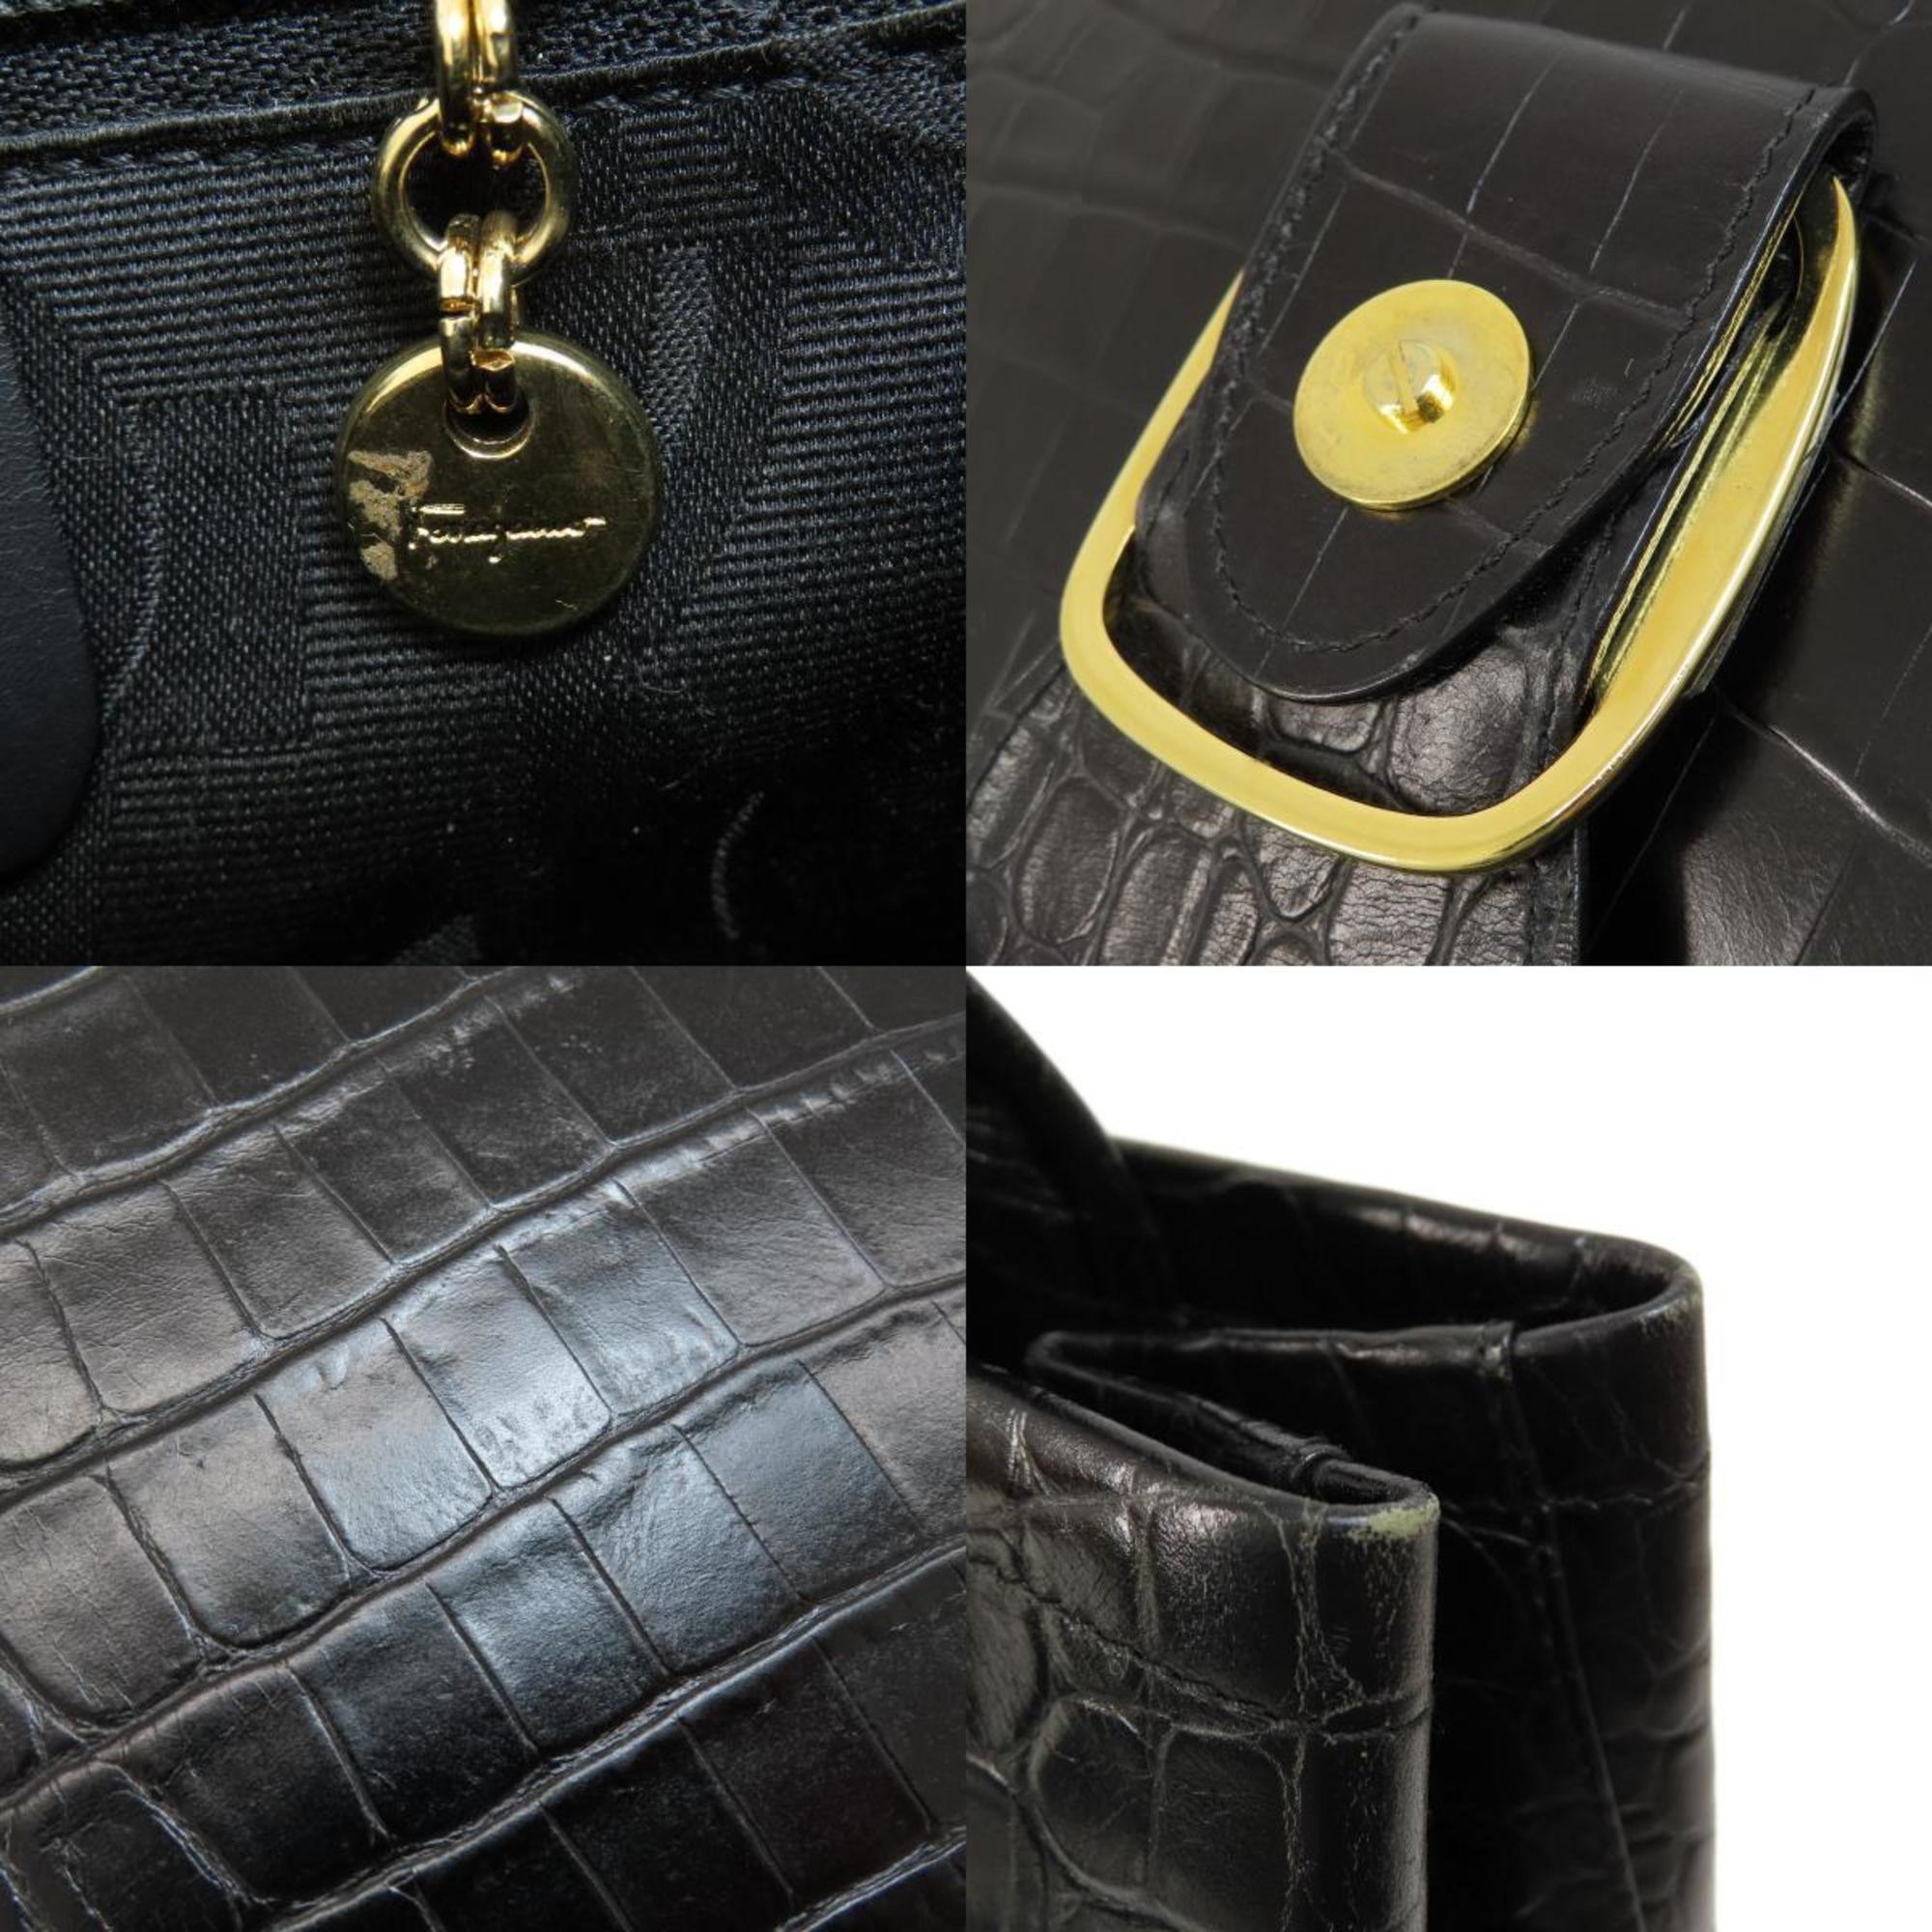 Salvatore Ferragamo motif embossed leather handbag for women